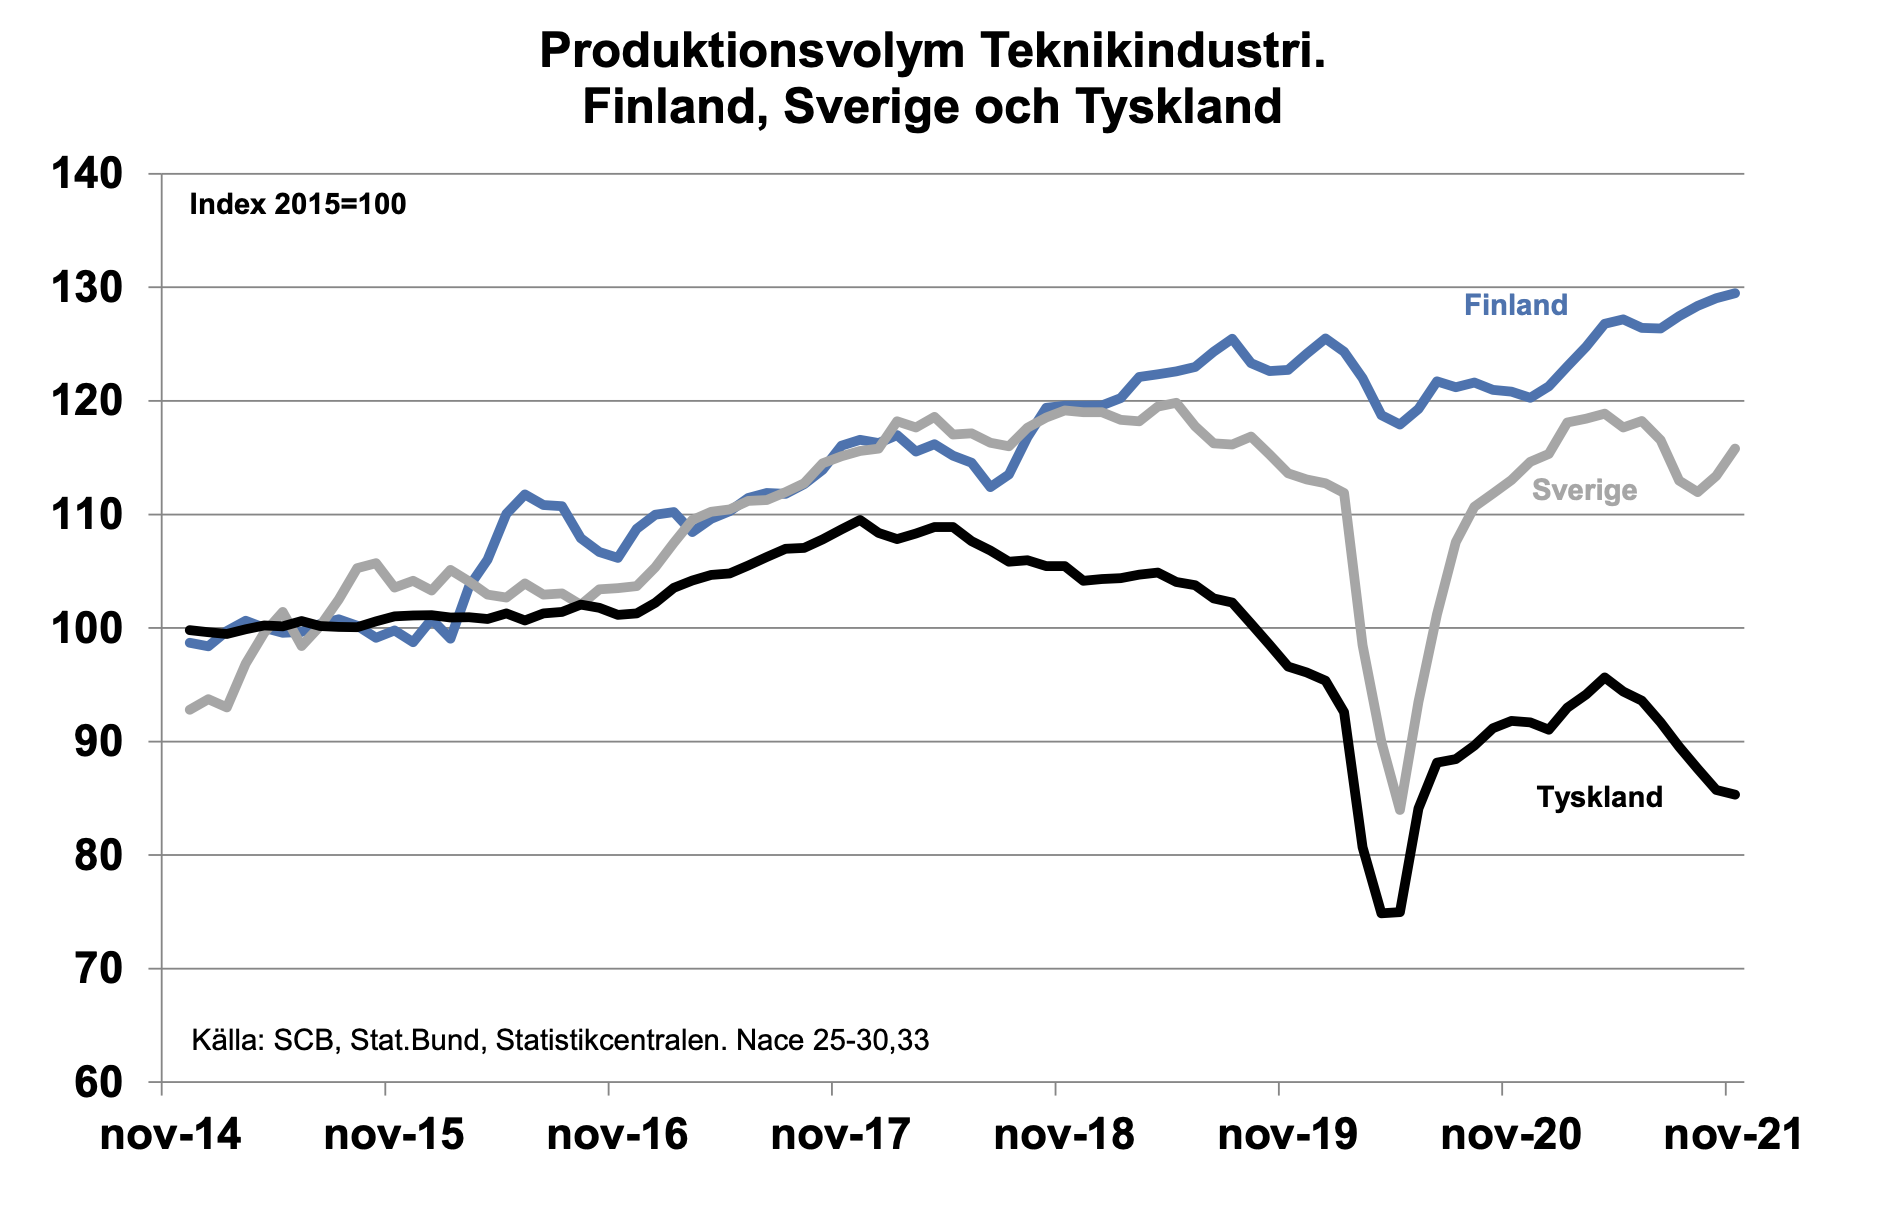 produktionsvolym-teknikindustri-finland-sverige-tyskland.png